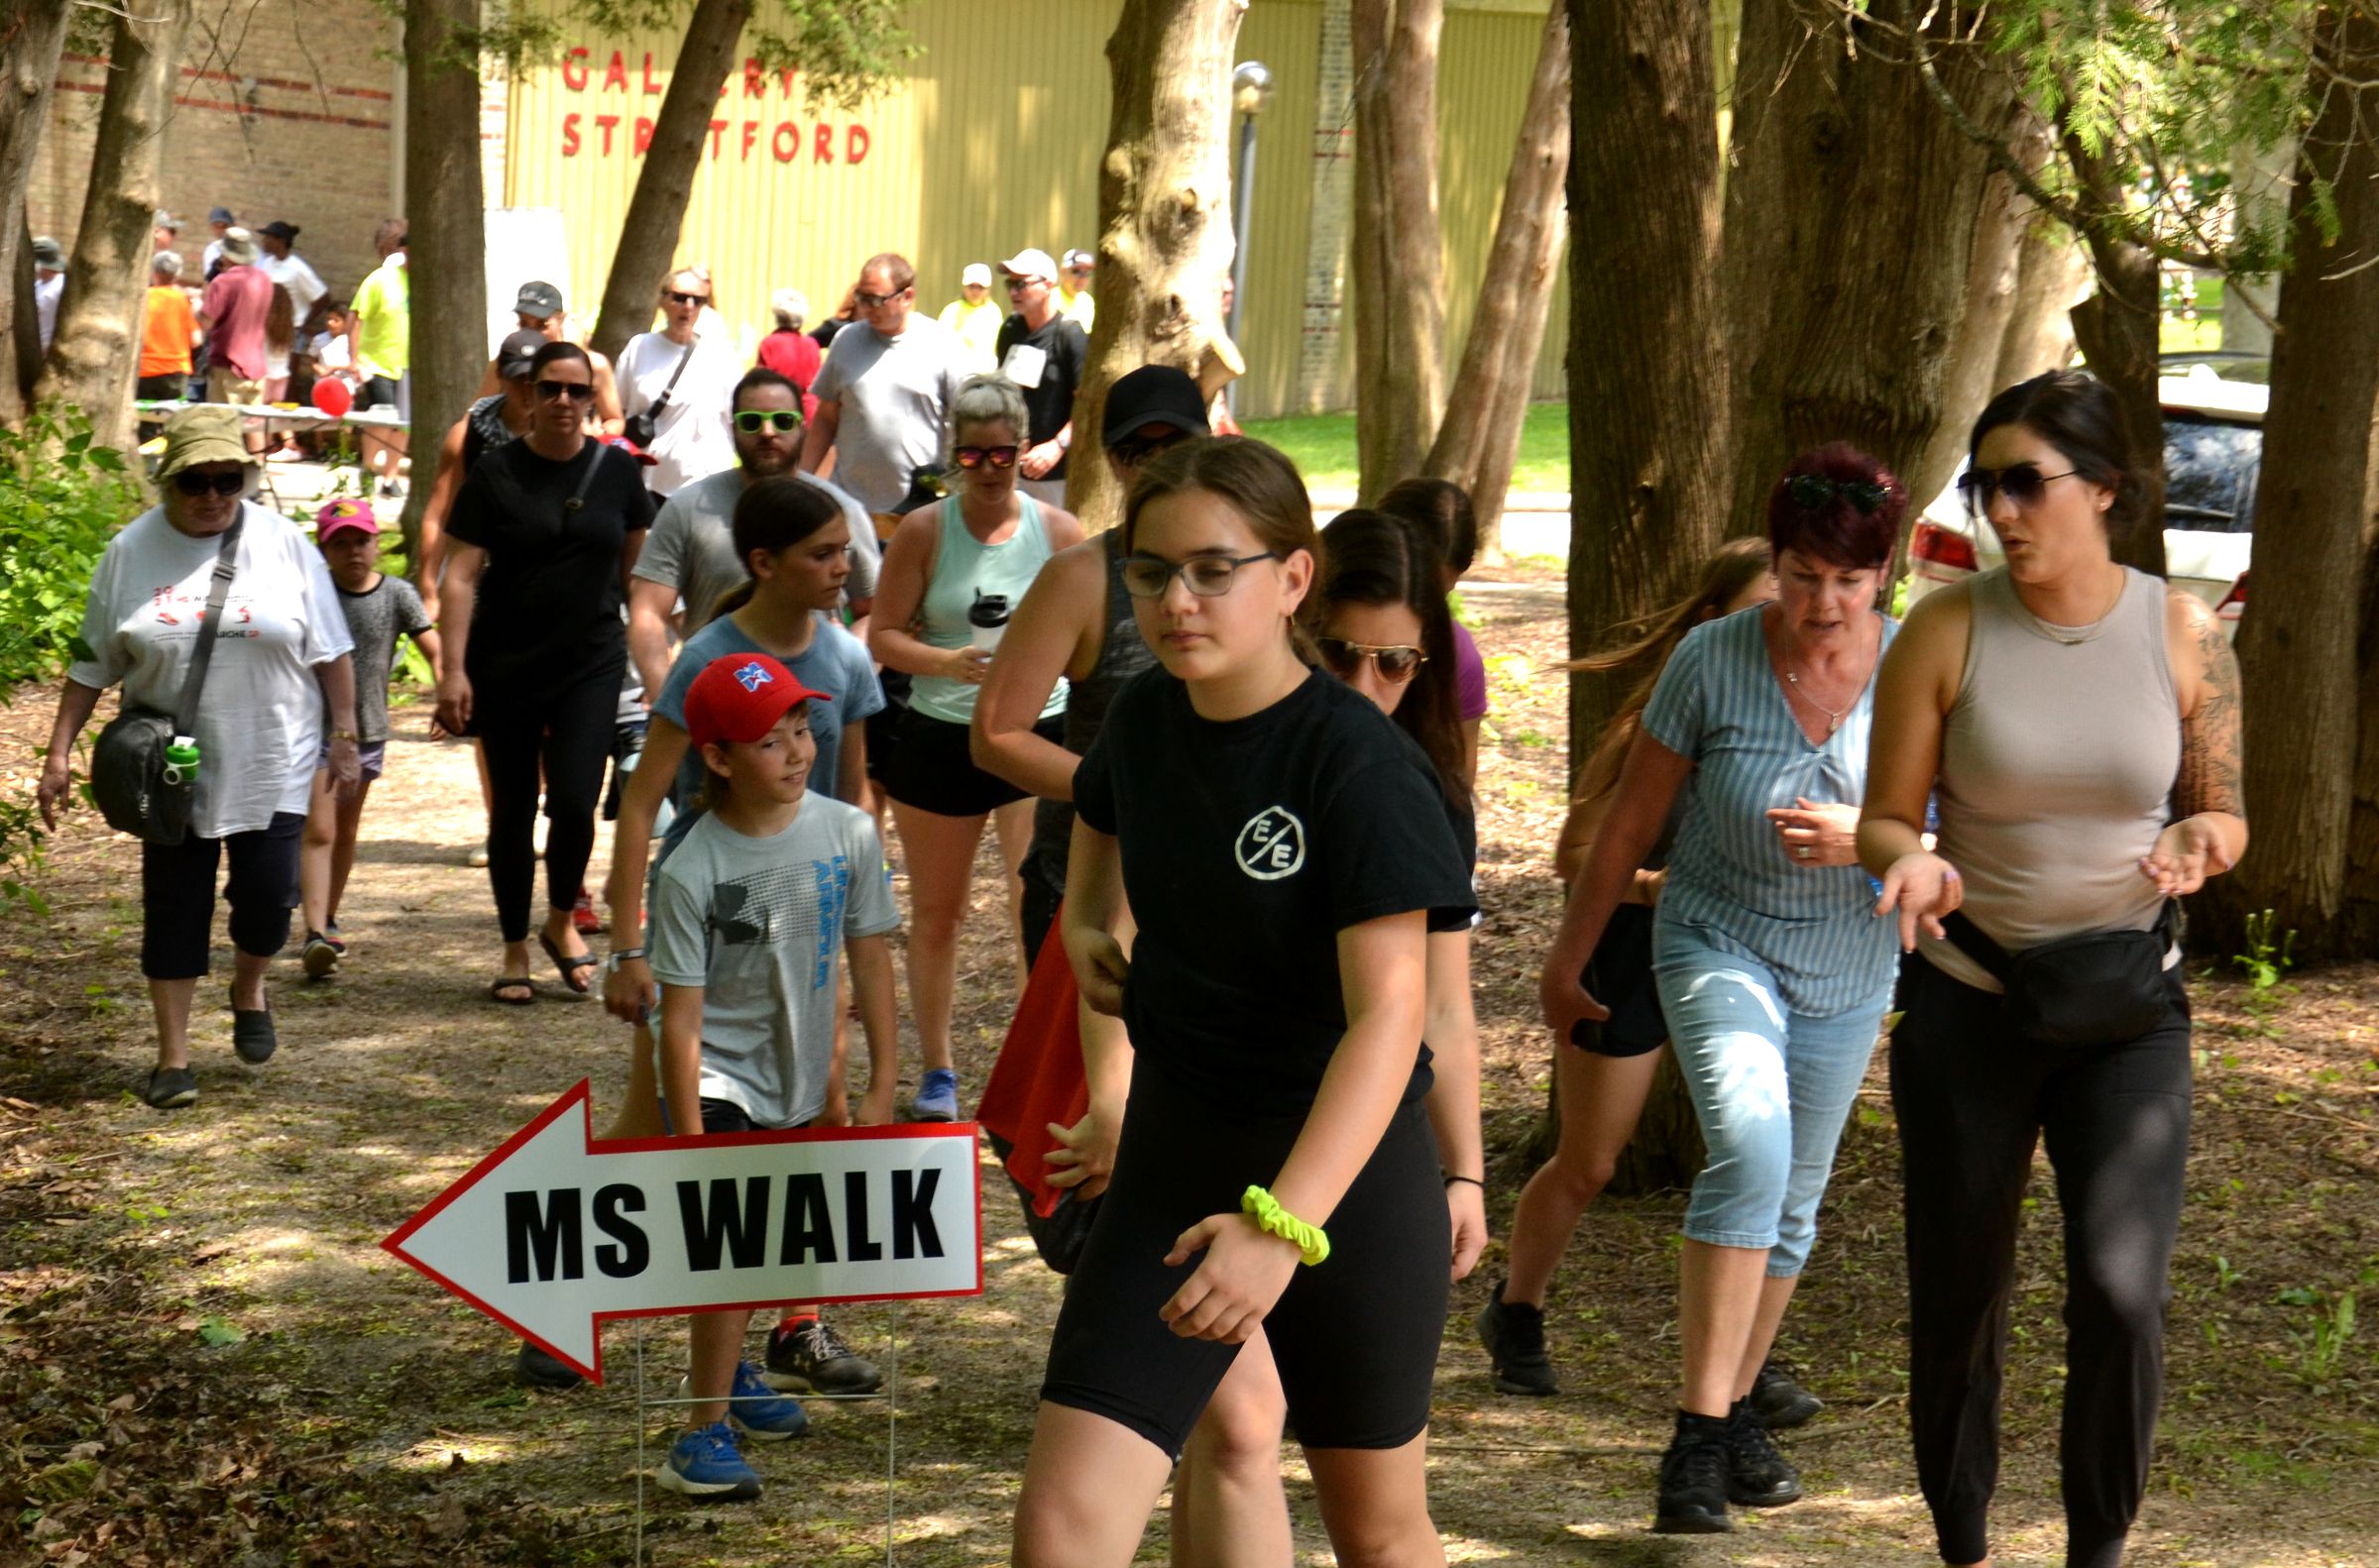 Volunteerrun StratfordPerth MS Walk raises nearly 36,000 (so far